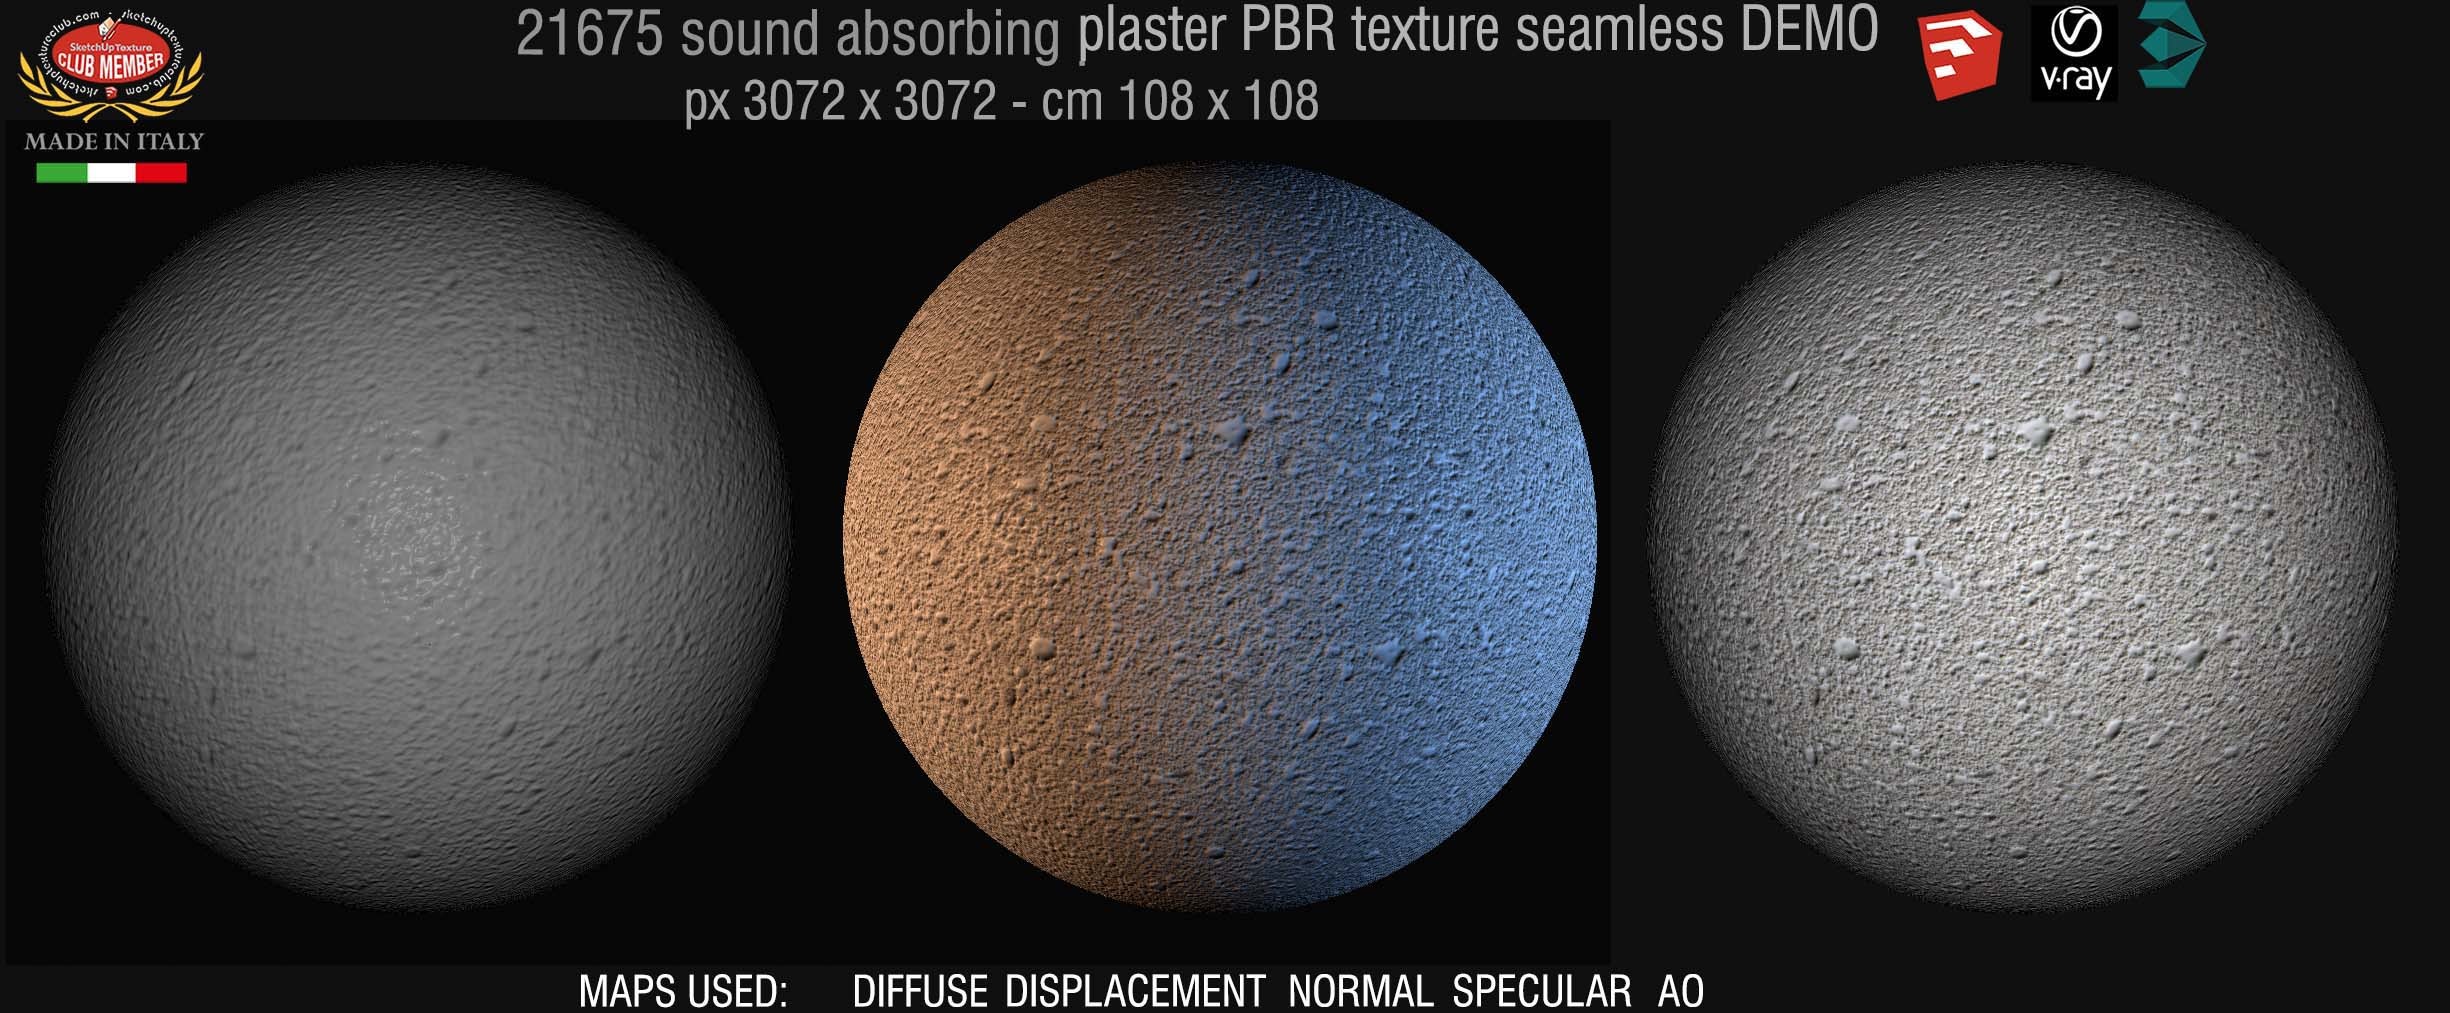 21675 sound absorbing plaster PBR texture seamless DEMO